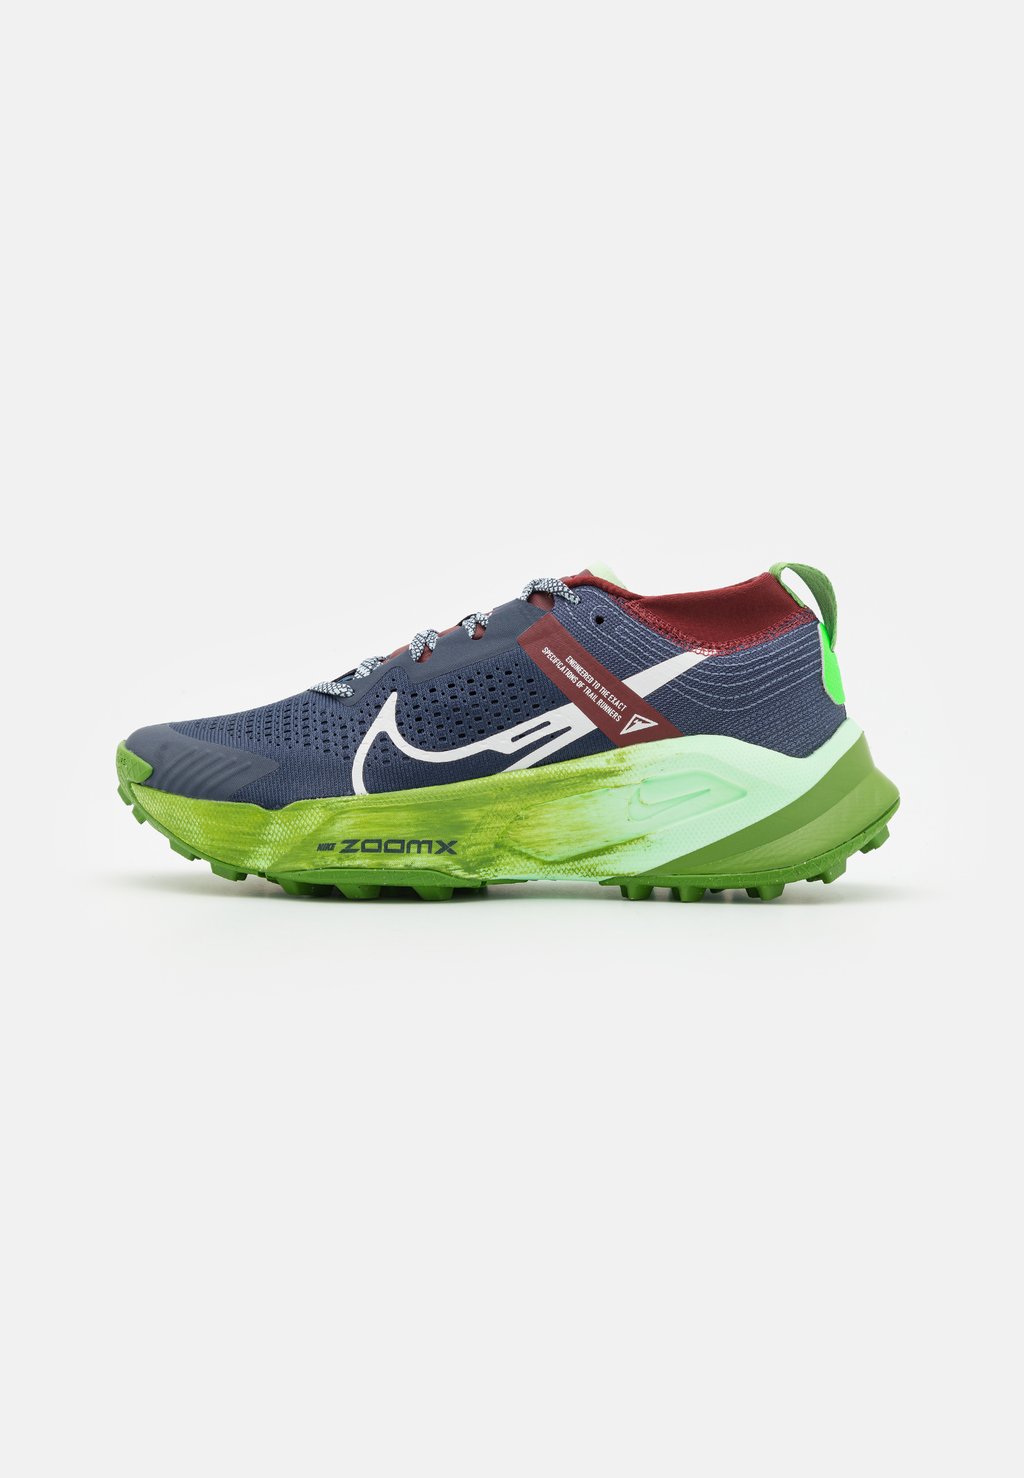 Кроссовки для бега по пересеченной местности ZOOMX ZEGAMA Nike, цвет thunder blue/summit white/chlorophyll/dark team red/vapor green